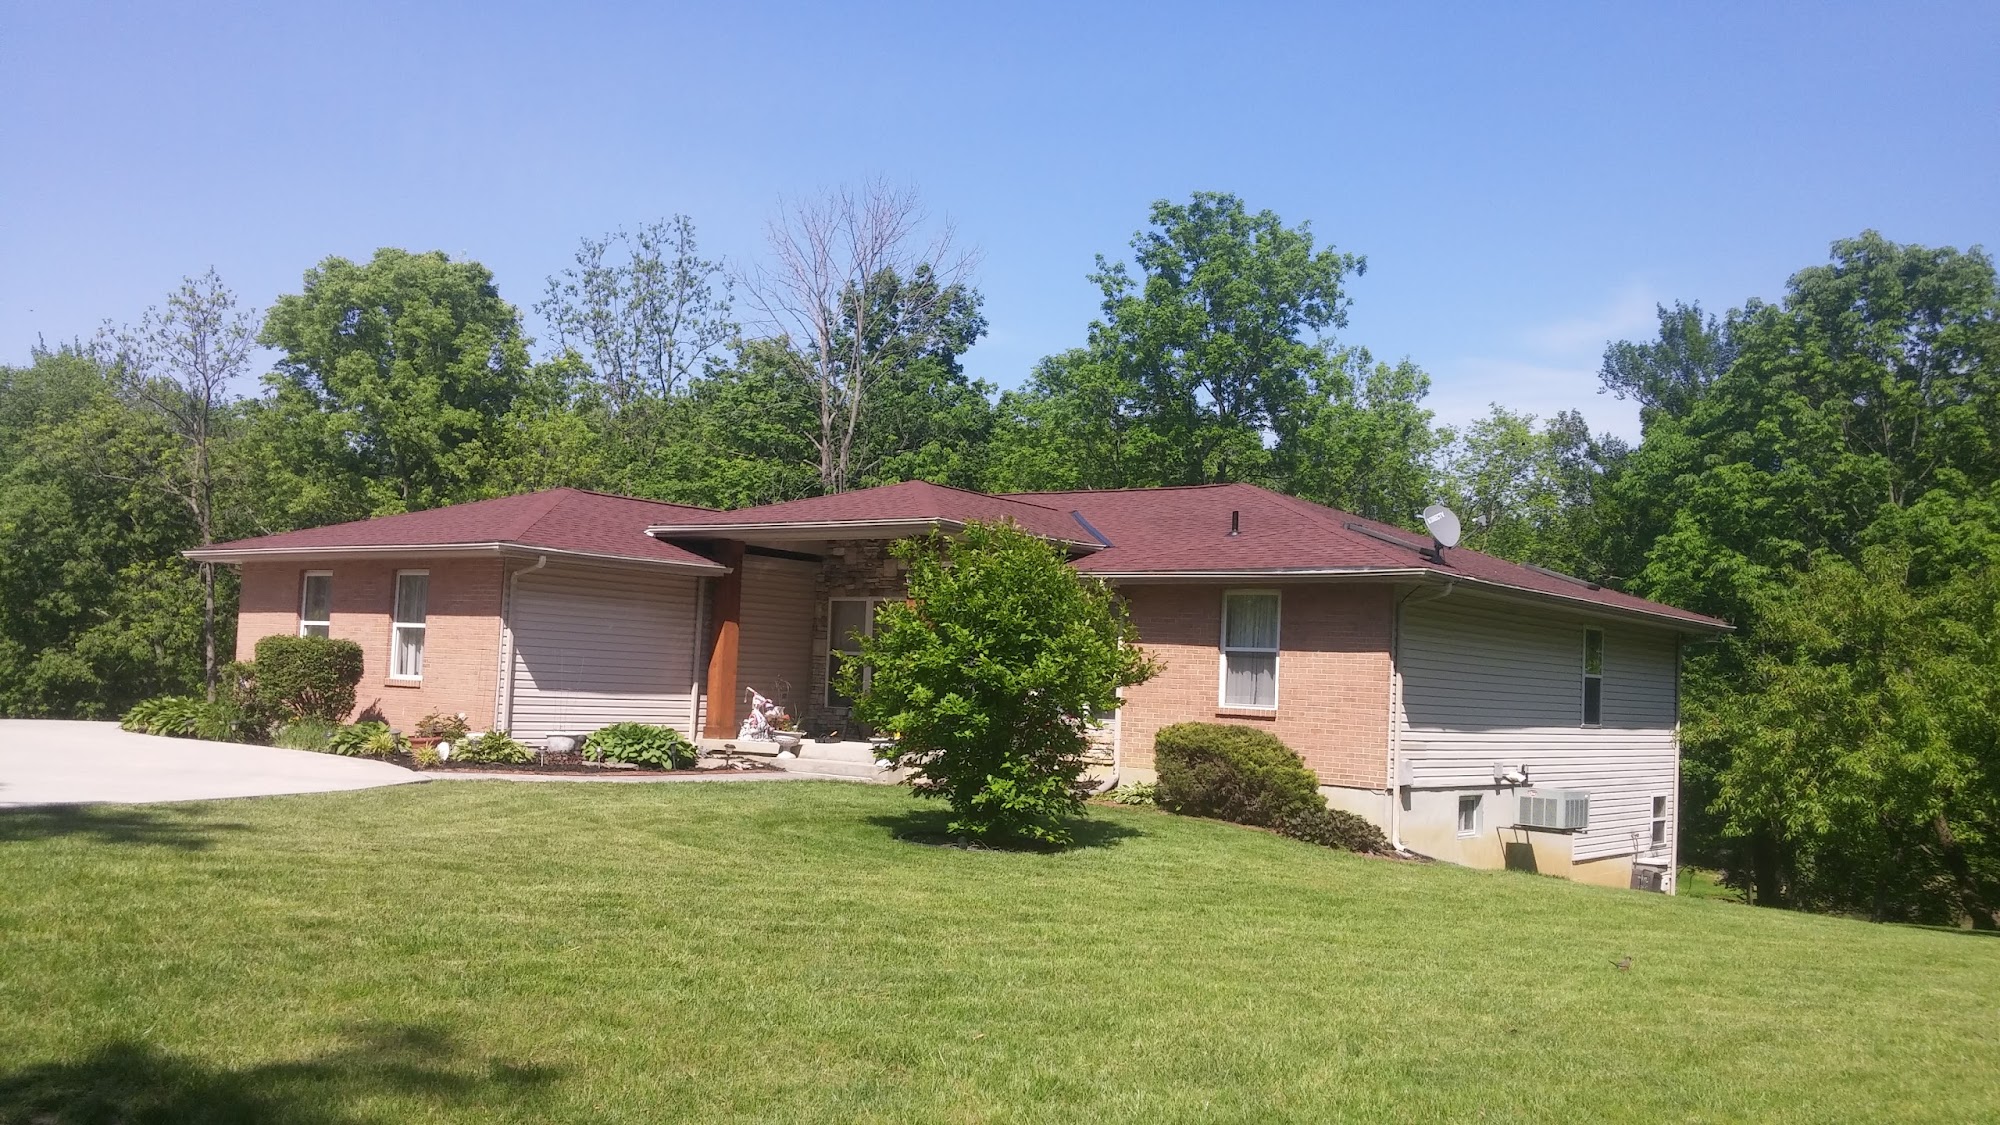 Tamlin Roofing & Windows 5574 Eureka Dr, Liberty Ohio 45011